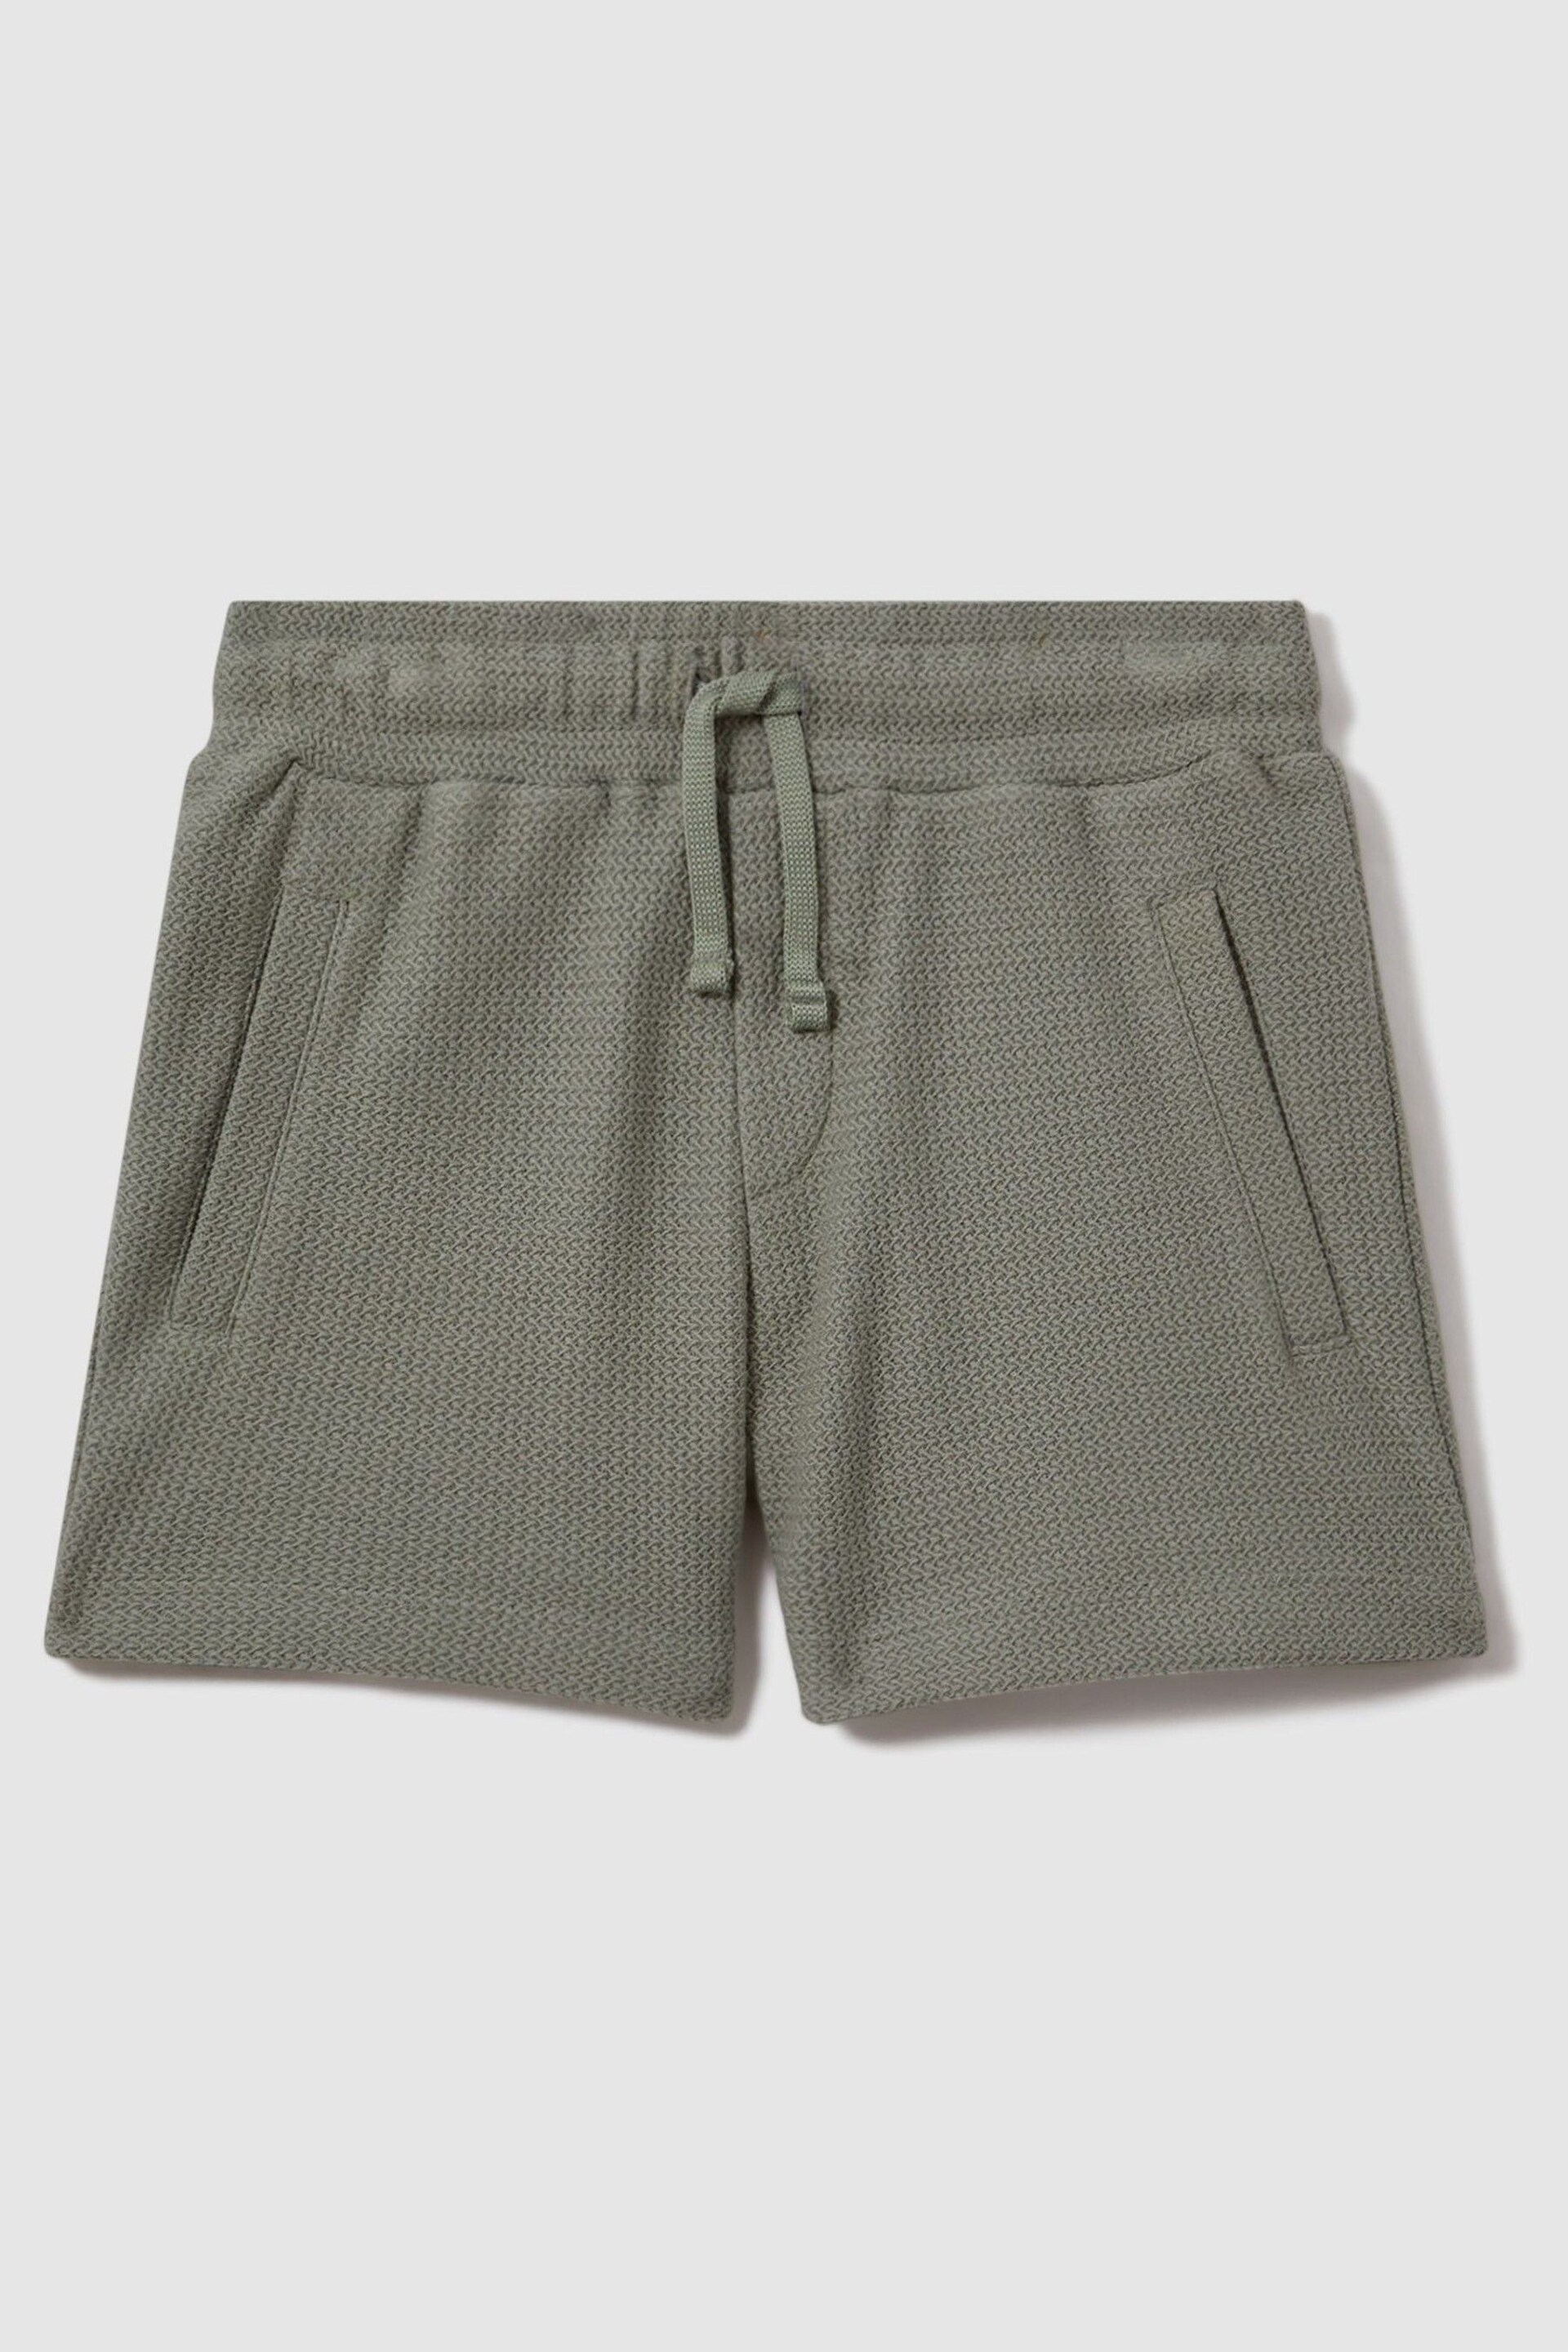 Reiss Pistachio Hester Junior Textured Cotton Drawstring Shorts - Image 1 of 3